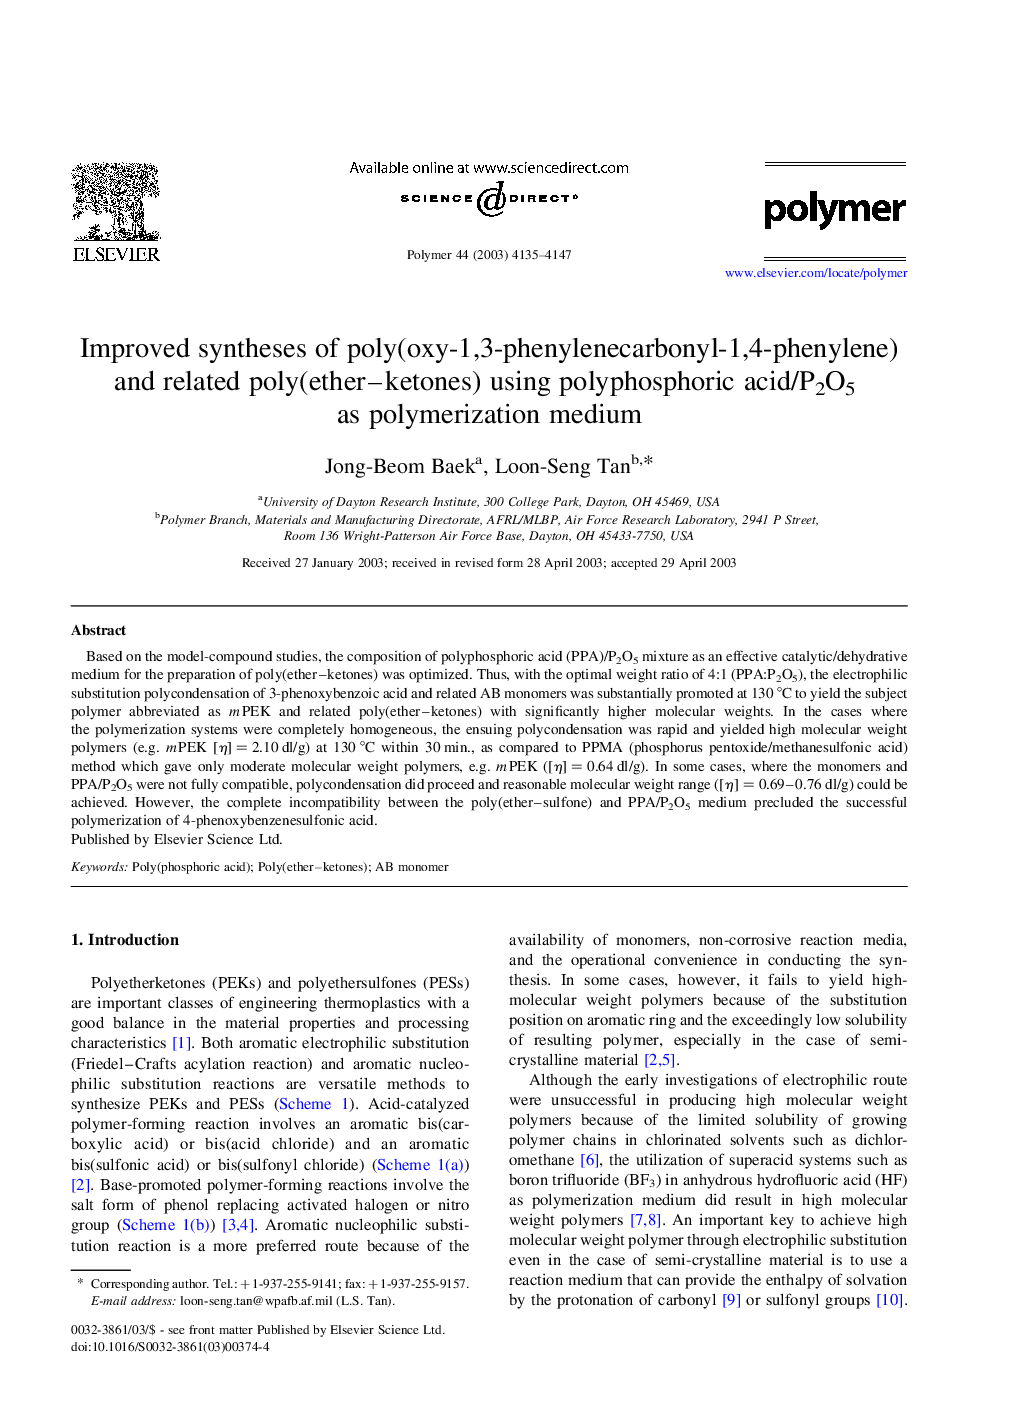 Improved syntheses of poly(oxy-1,3-phenylenecarbonyl-1,4-phenylene) and related poly(ether-ketones) using polyphosphoric acid/P2O5 as polymerization medium